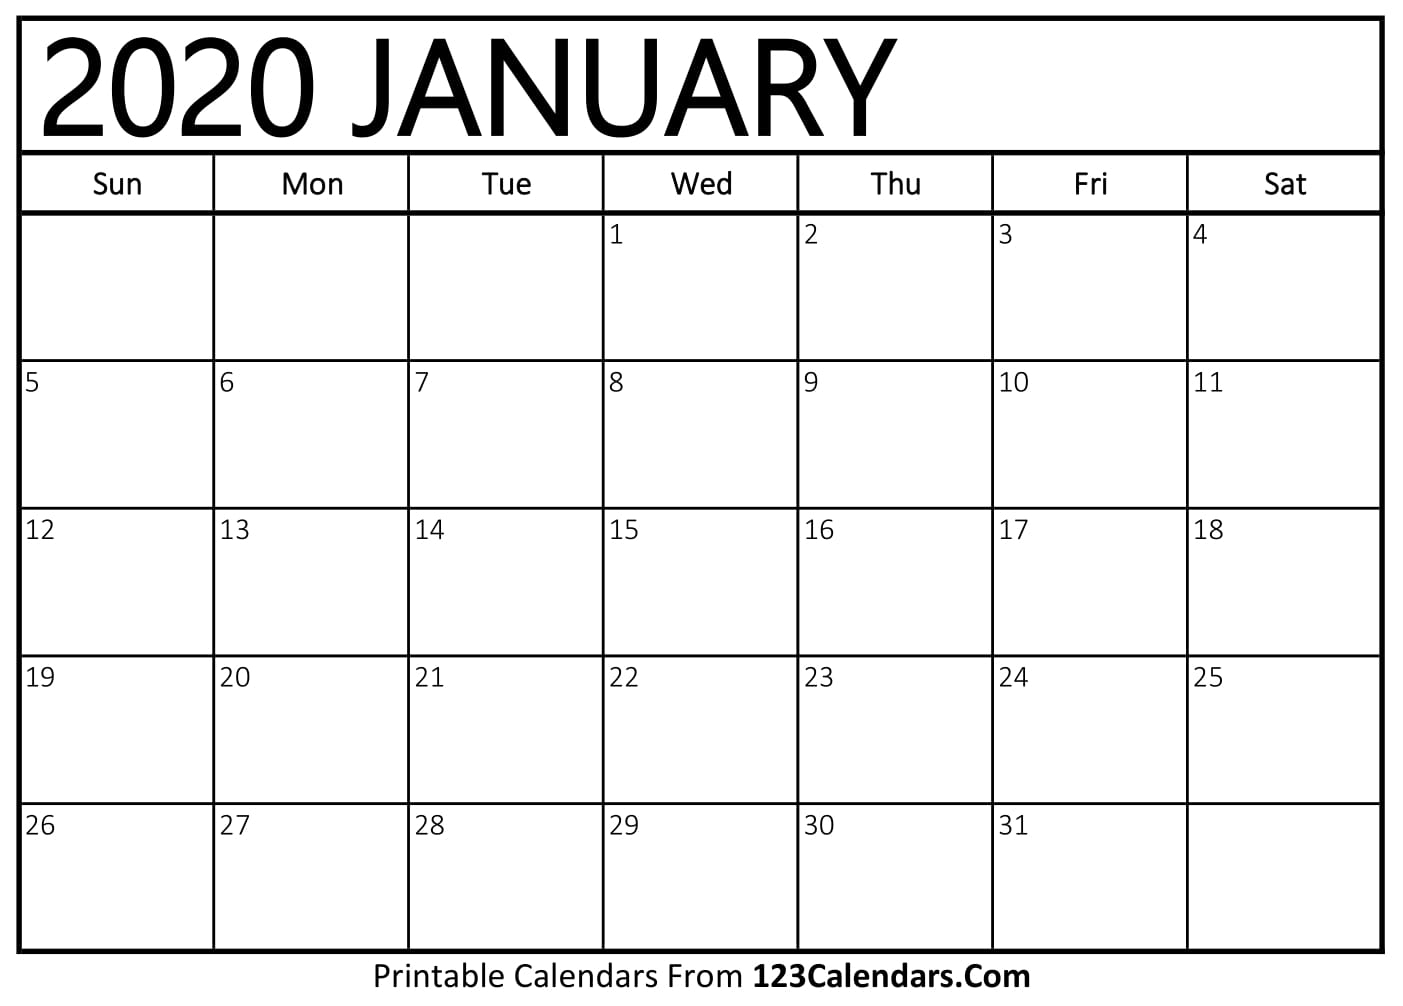 January 2020 Printable Calendar | 123Calendars for 123 Calendar January 2020